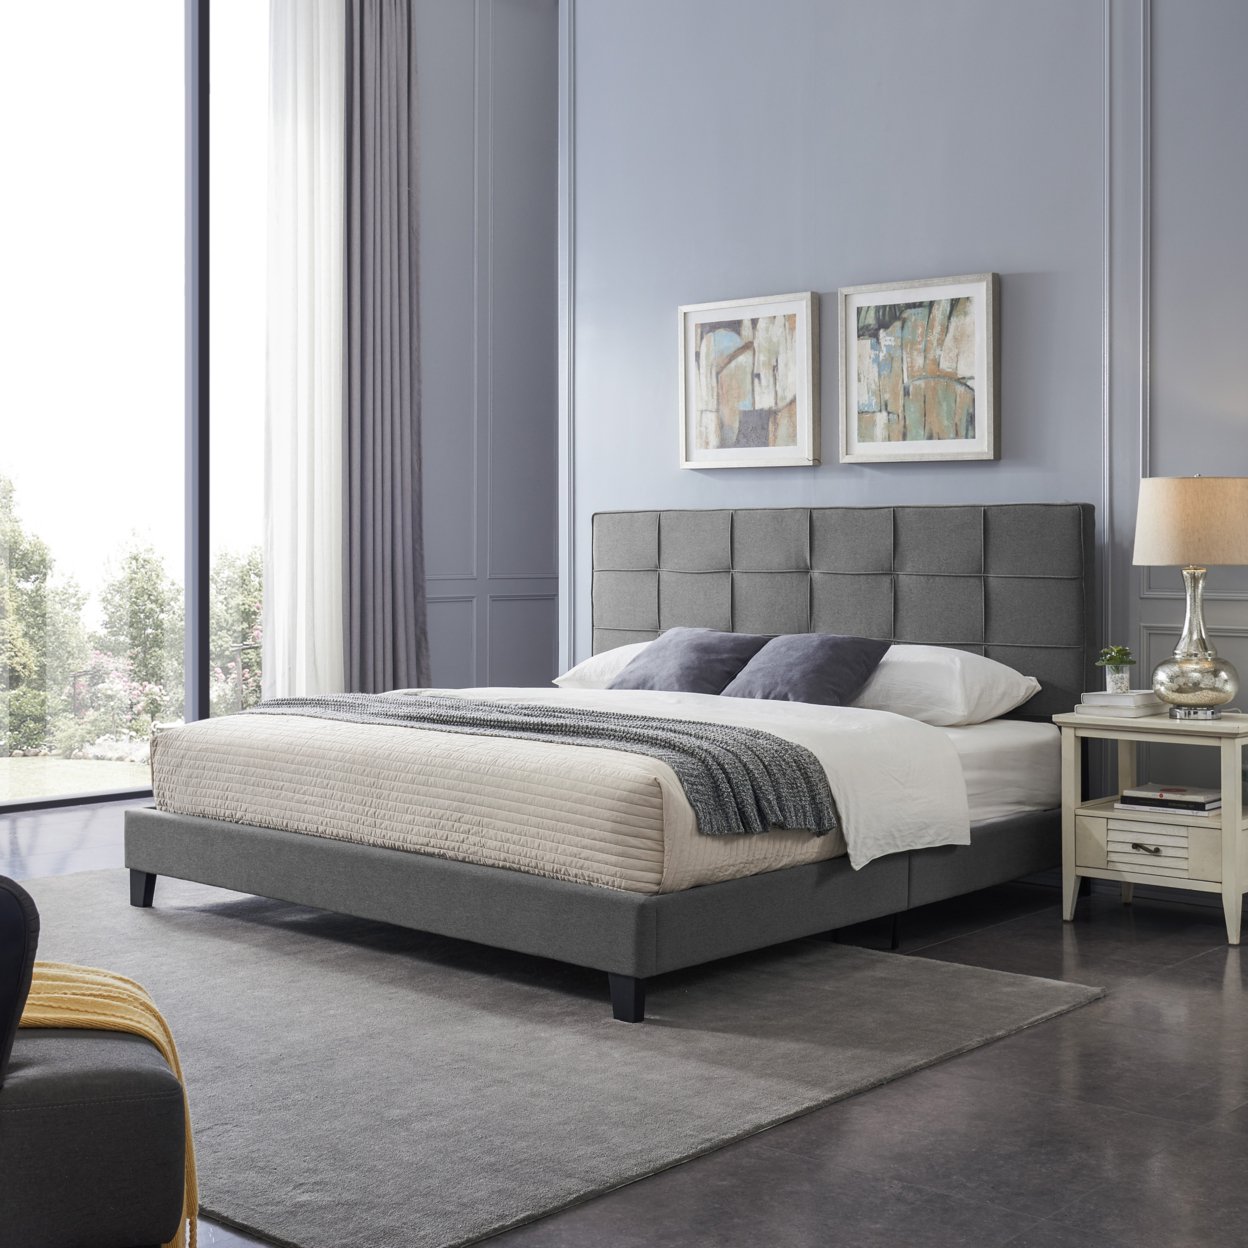 Madera Contemporary Upholstered King Bed Platform - Charcoal Gray + Black